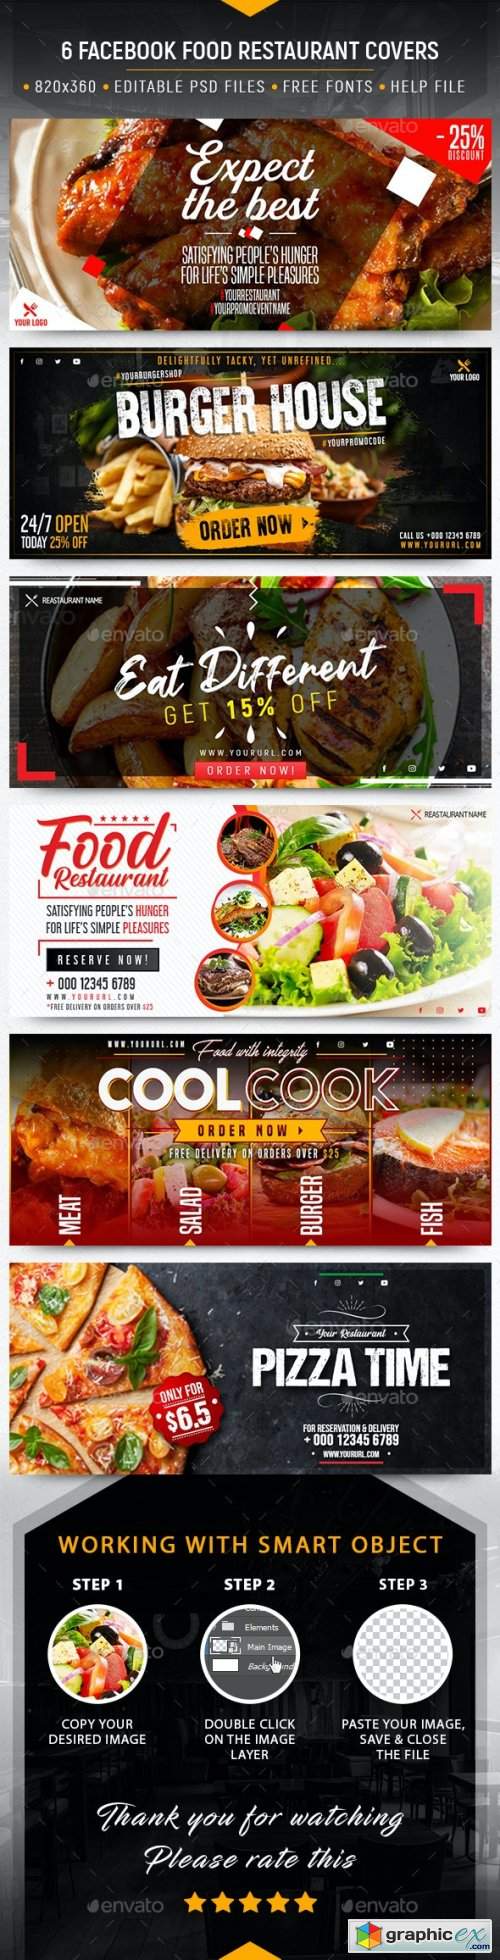 Facebook Food Restaurant Covers 